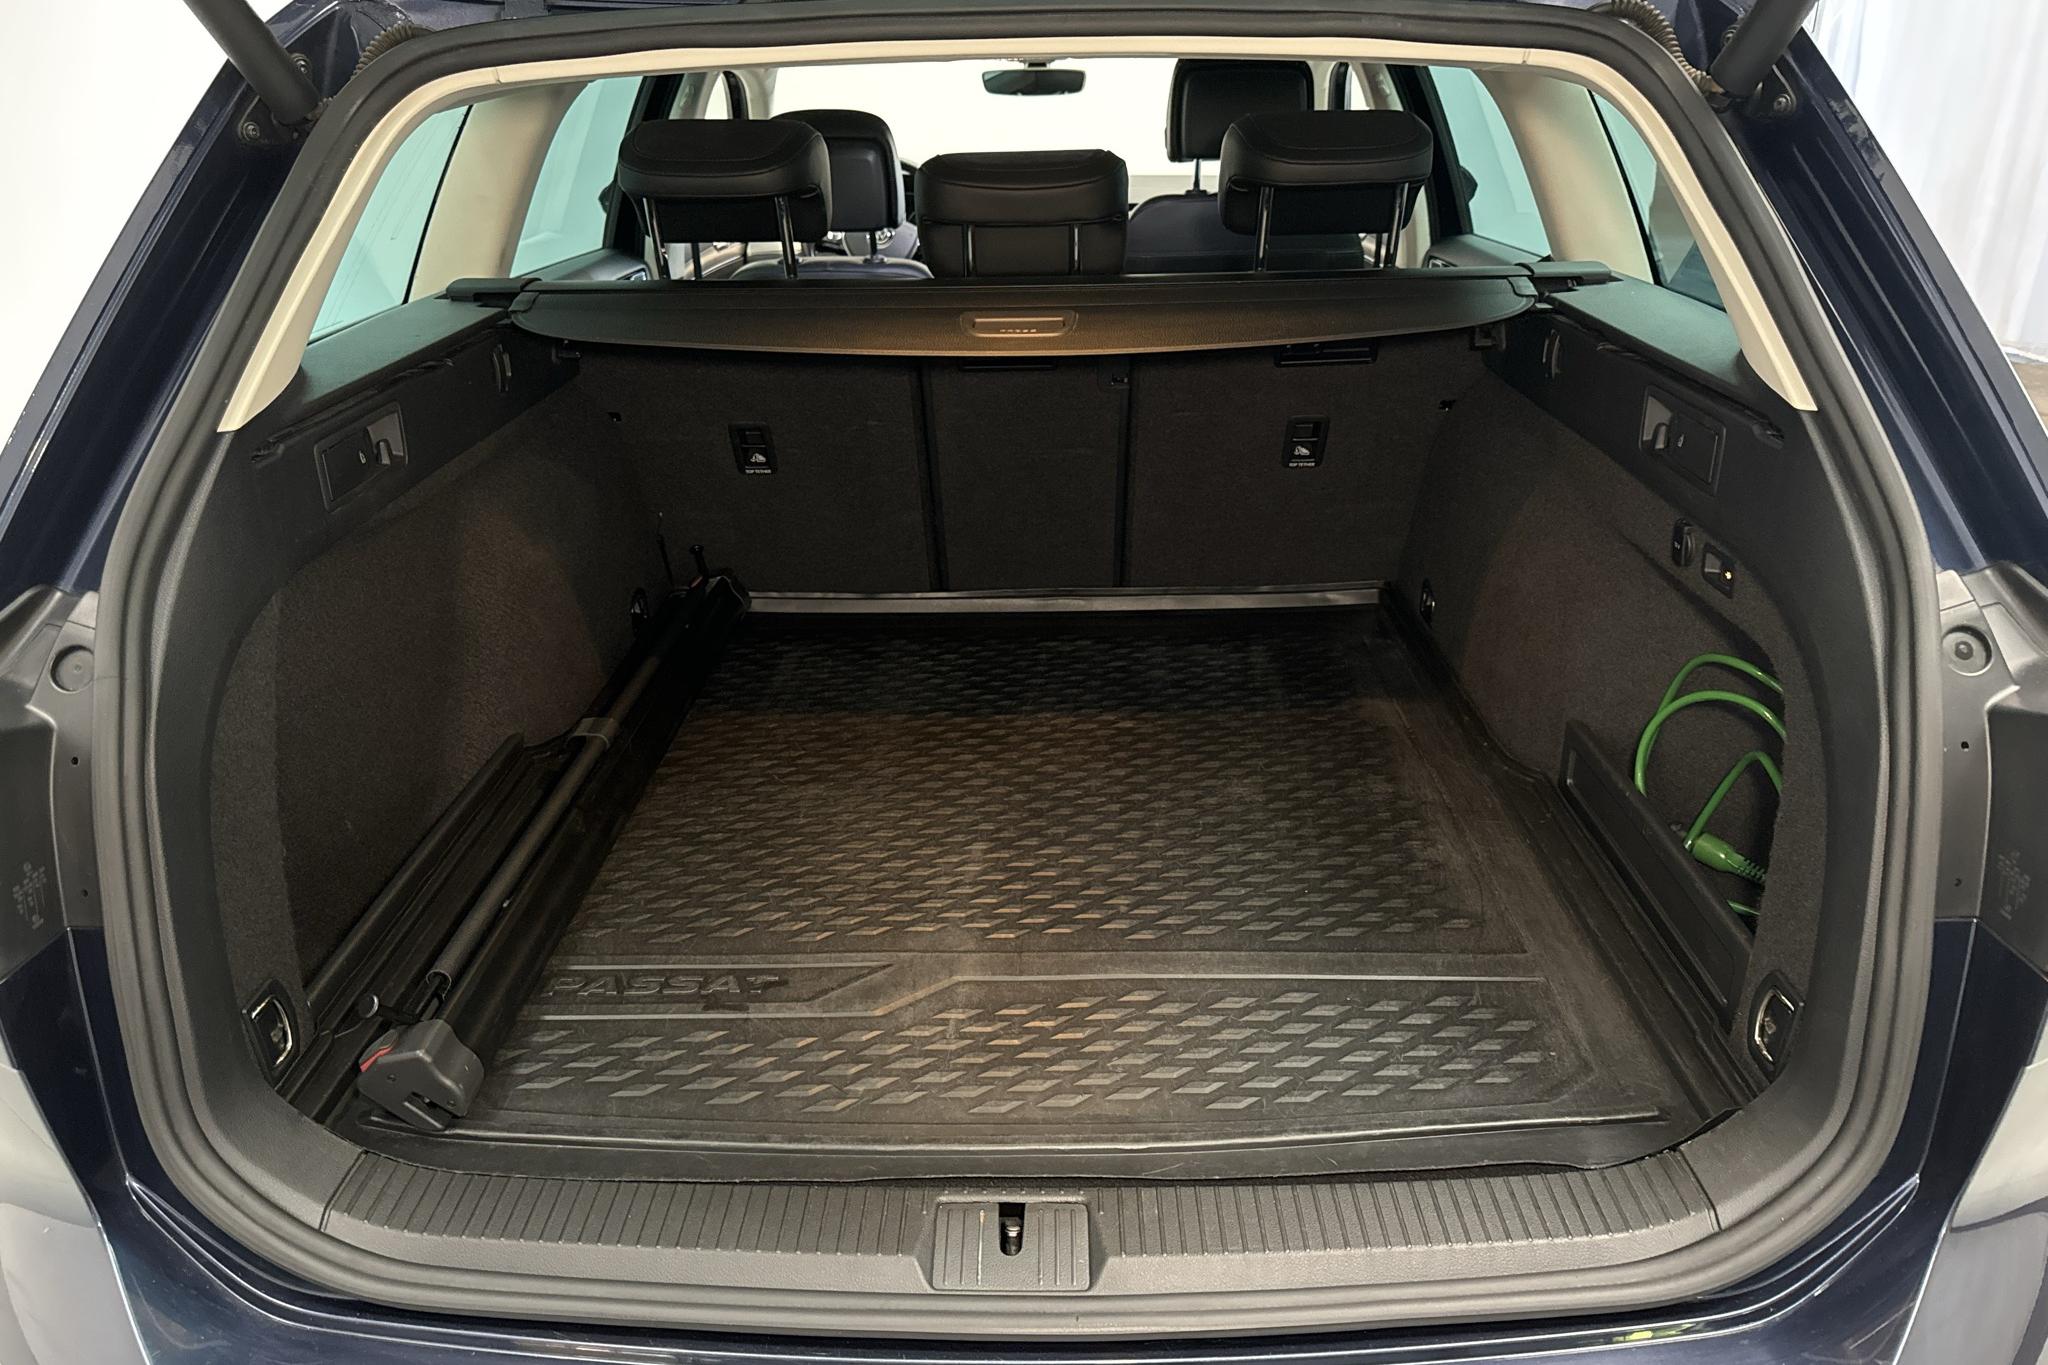 VW Passat 2.0 TDI Sportscombi 4MOTION (190hk) - 147 850 km - Automatyczna - Dark Blue - 2016